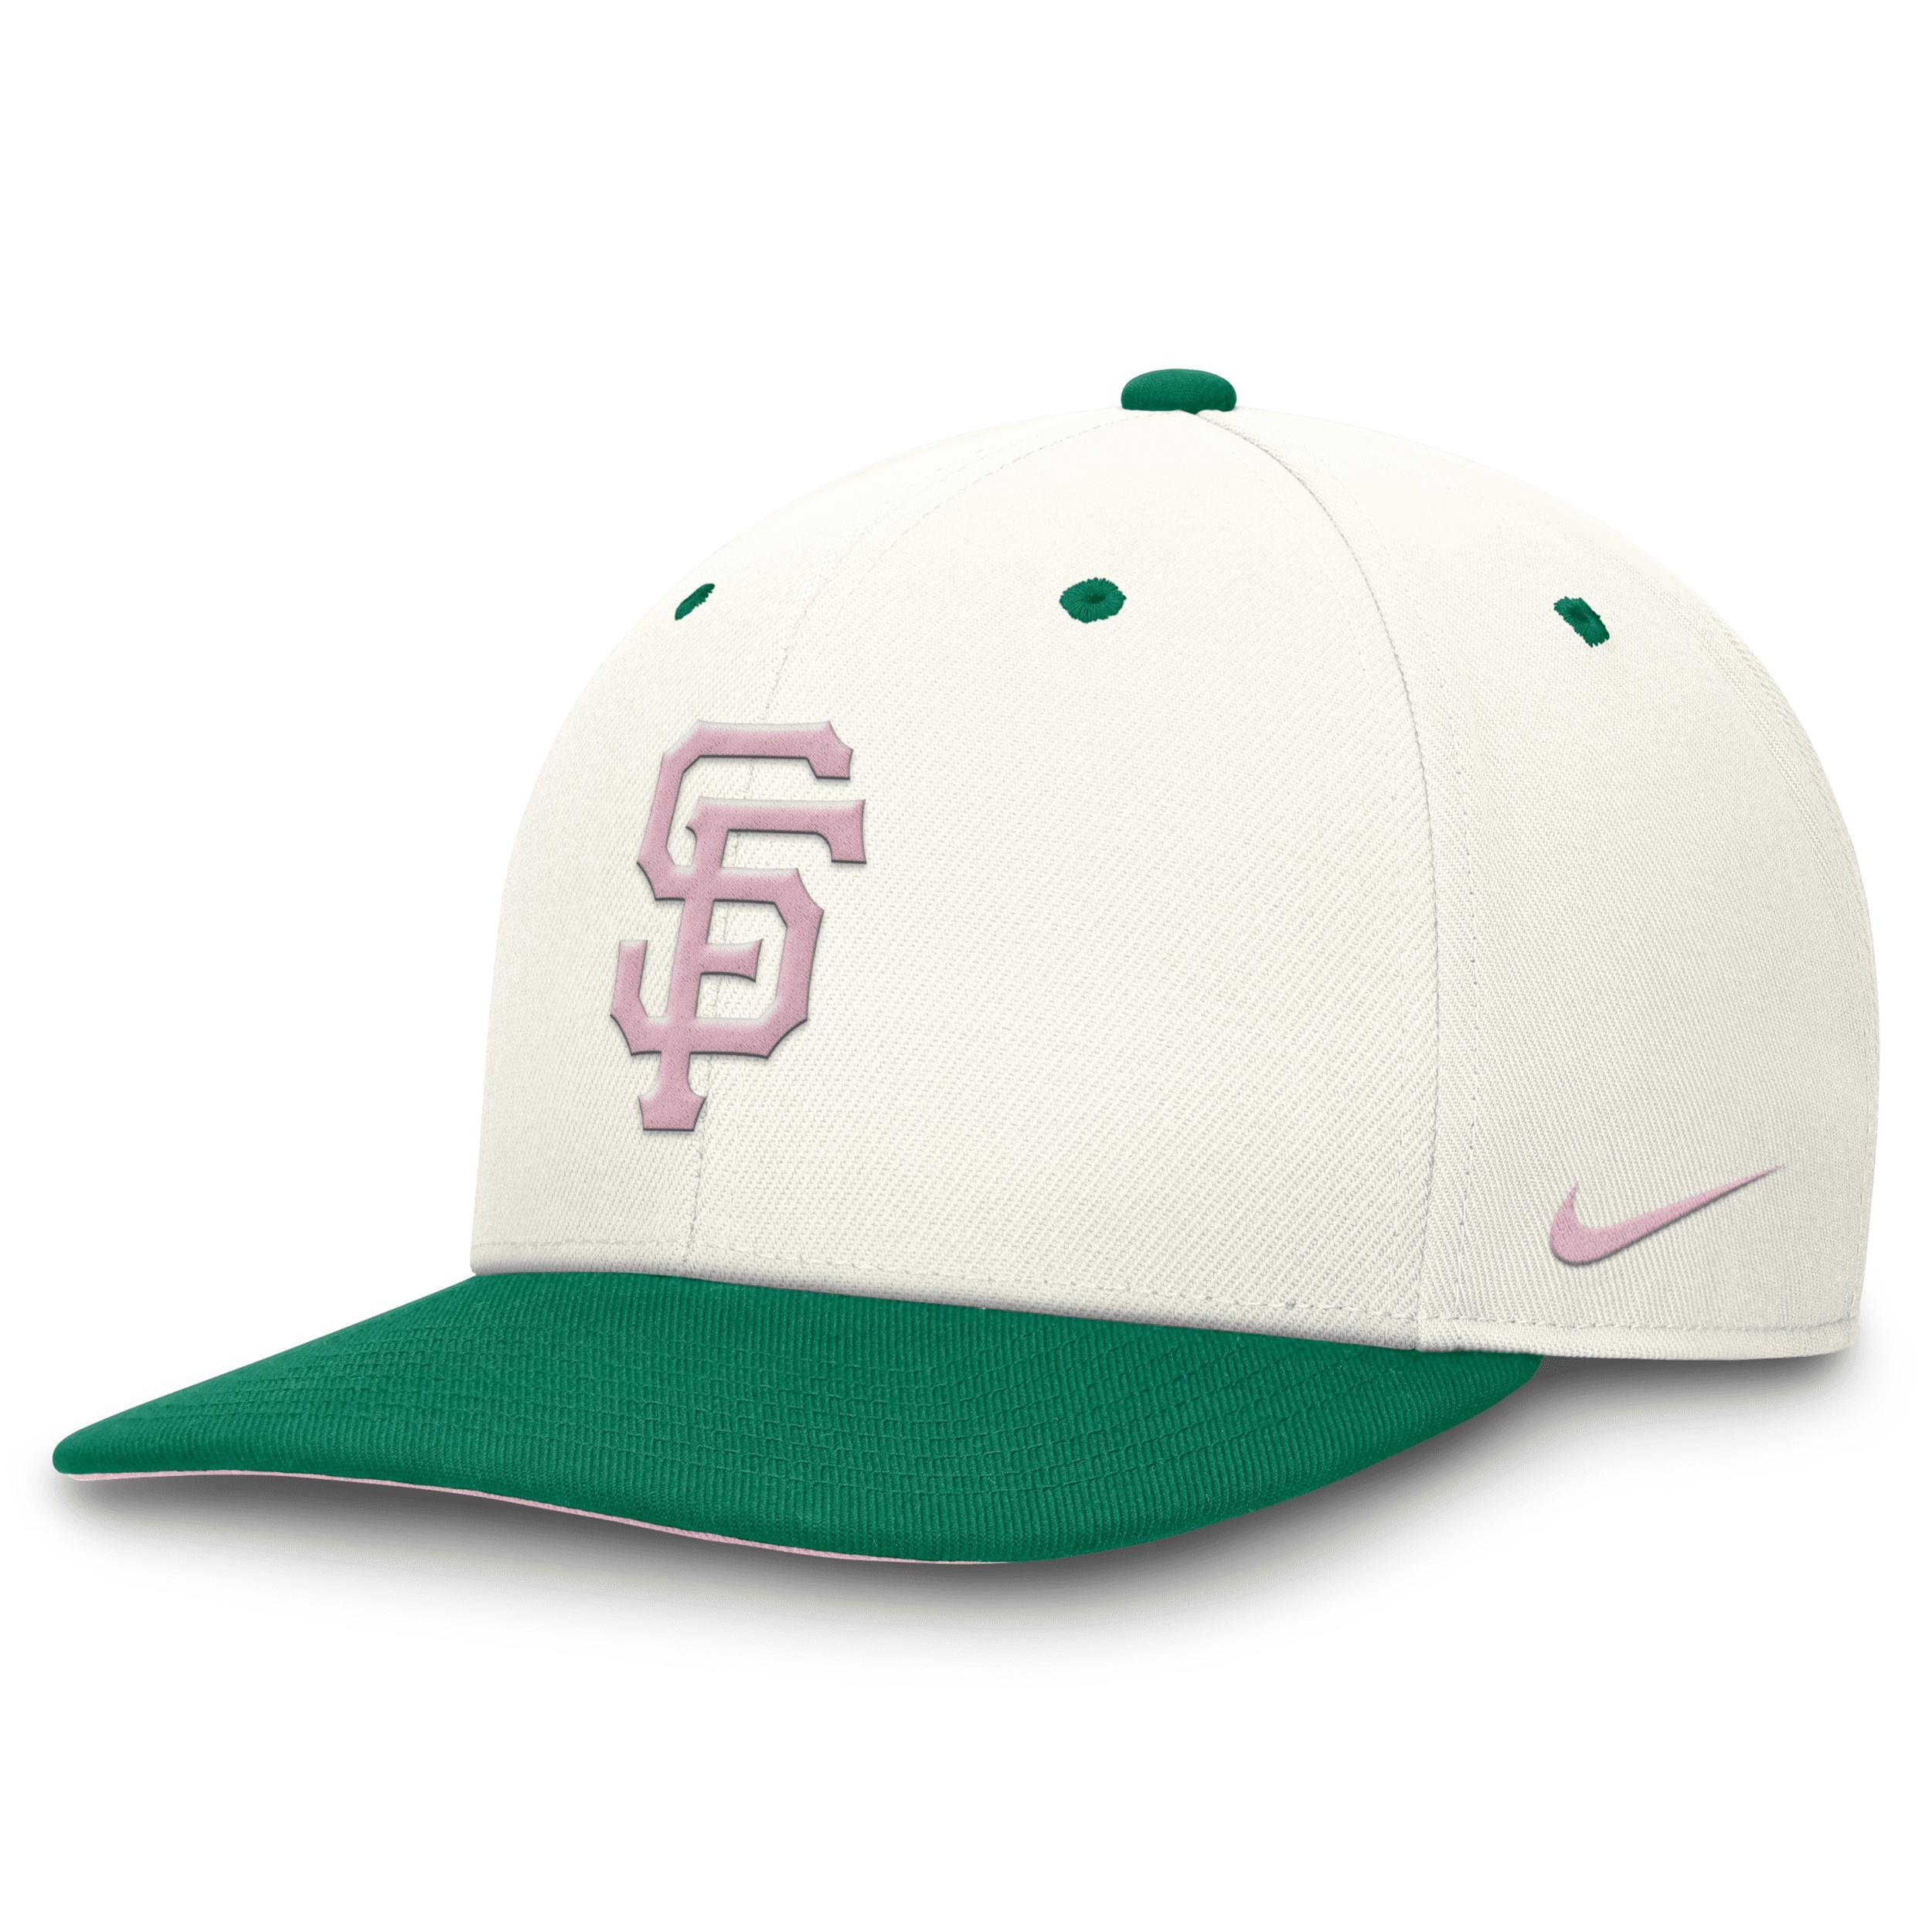 San Francisco Giants Sail Pro Nike Unisex Dri-FIT MLB Adjustable Hat by NIKE